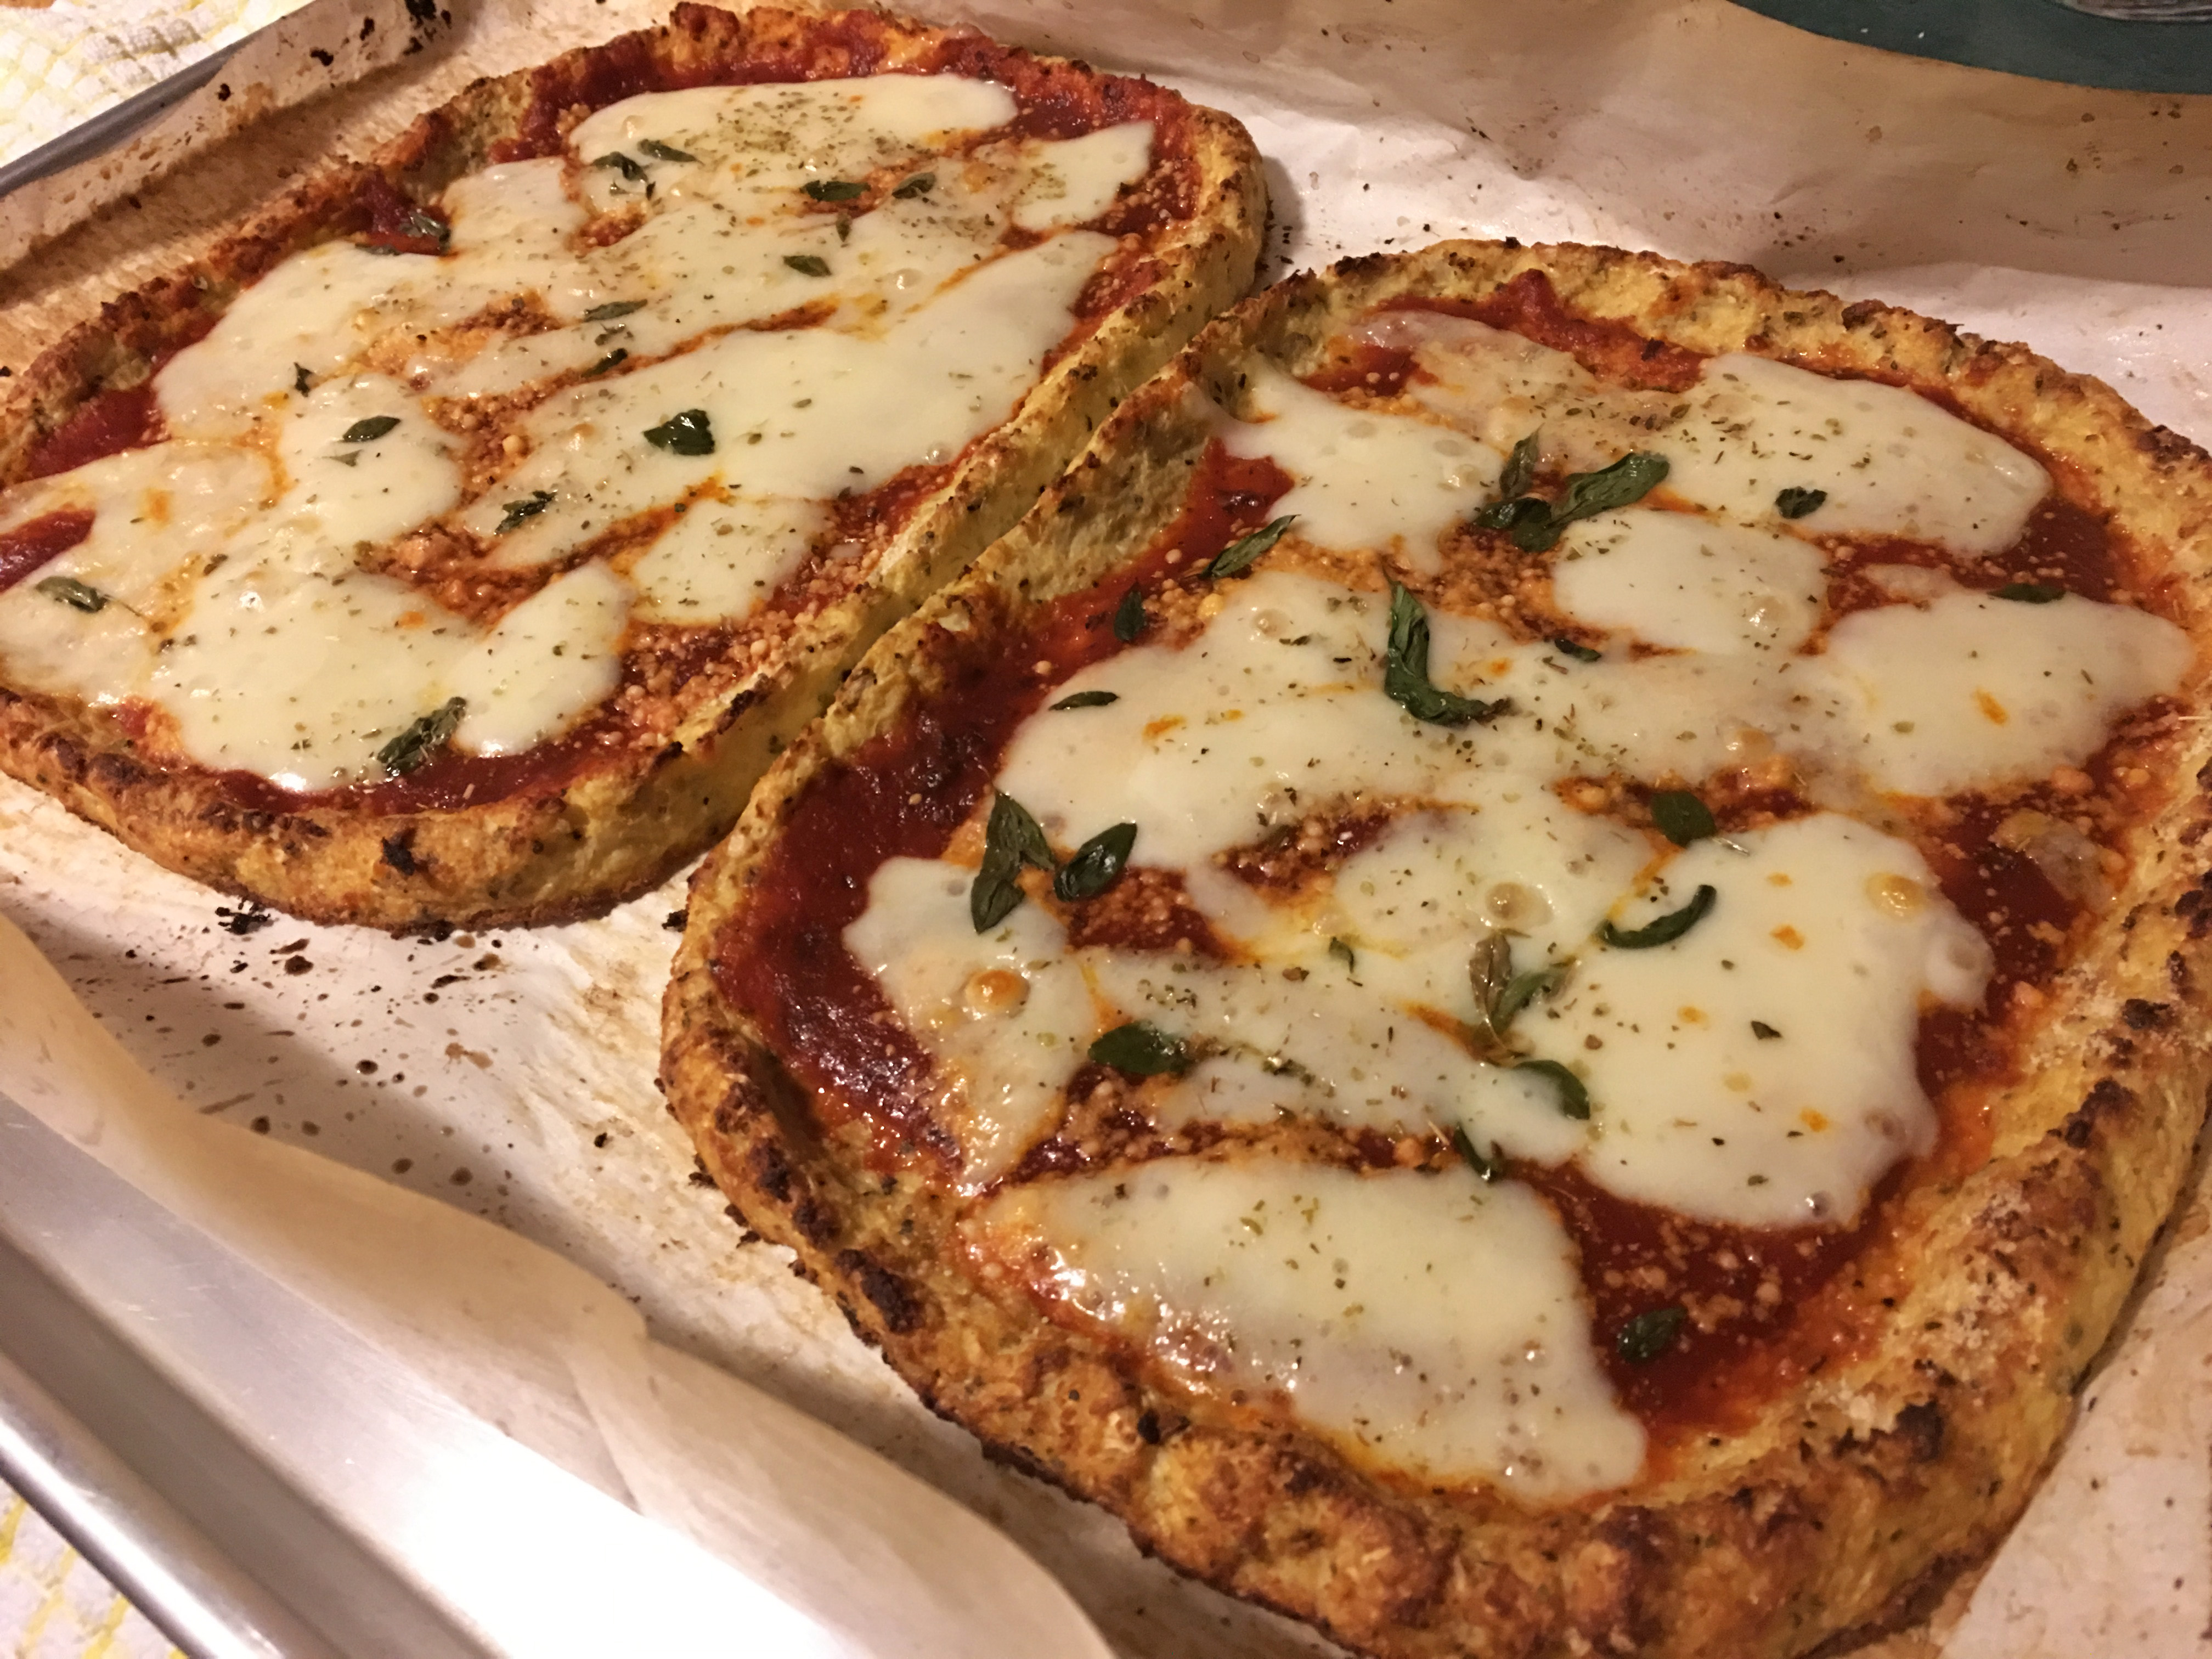  Healthy Cauliflower Pizza Crust Recipe (That Doesn’t Fall Apart) – Gluten-Free, Grain-Free, Vegetarian